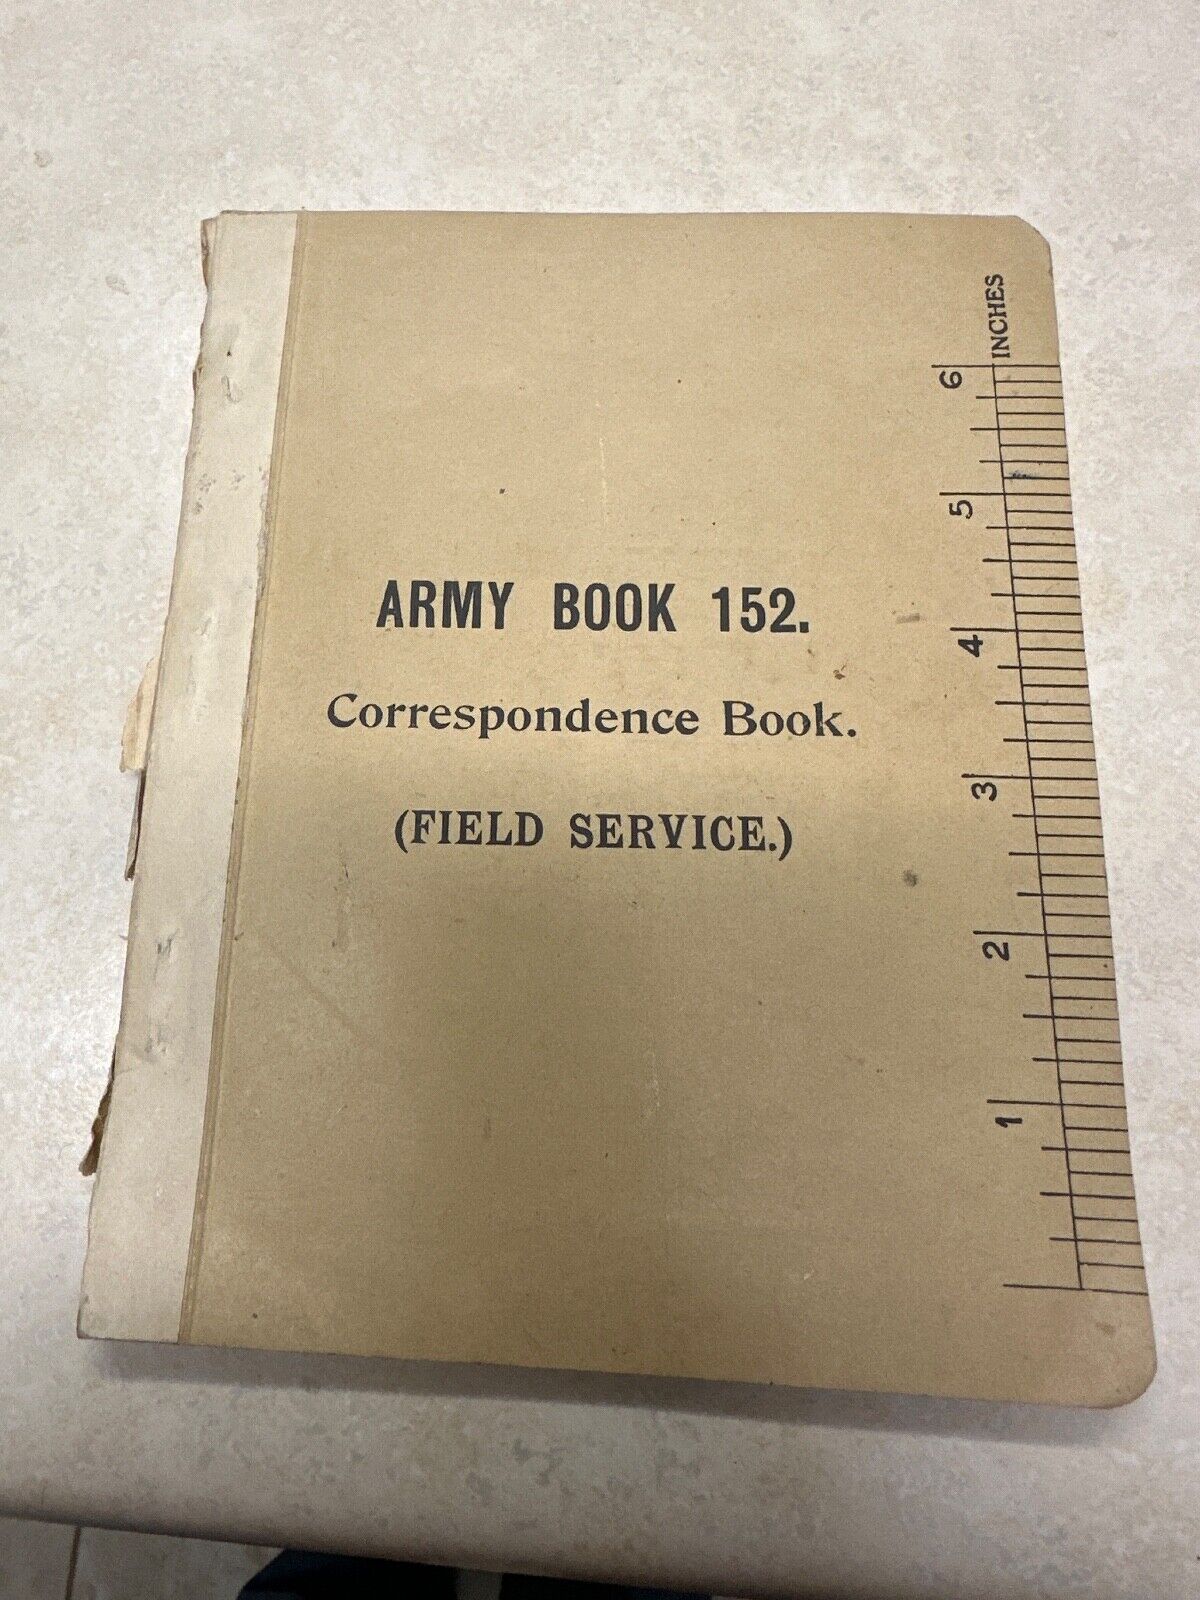 WW1 British Army Book 152 Field Service Correspondence Book